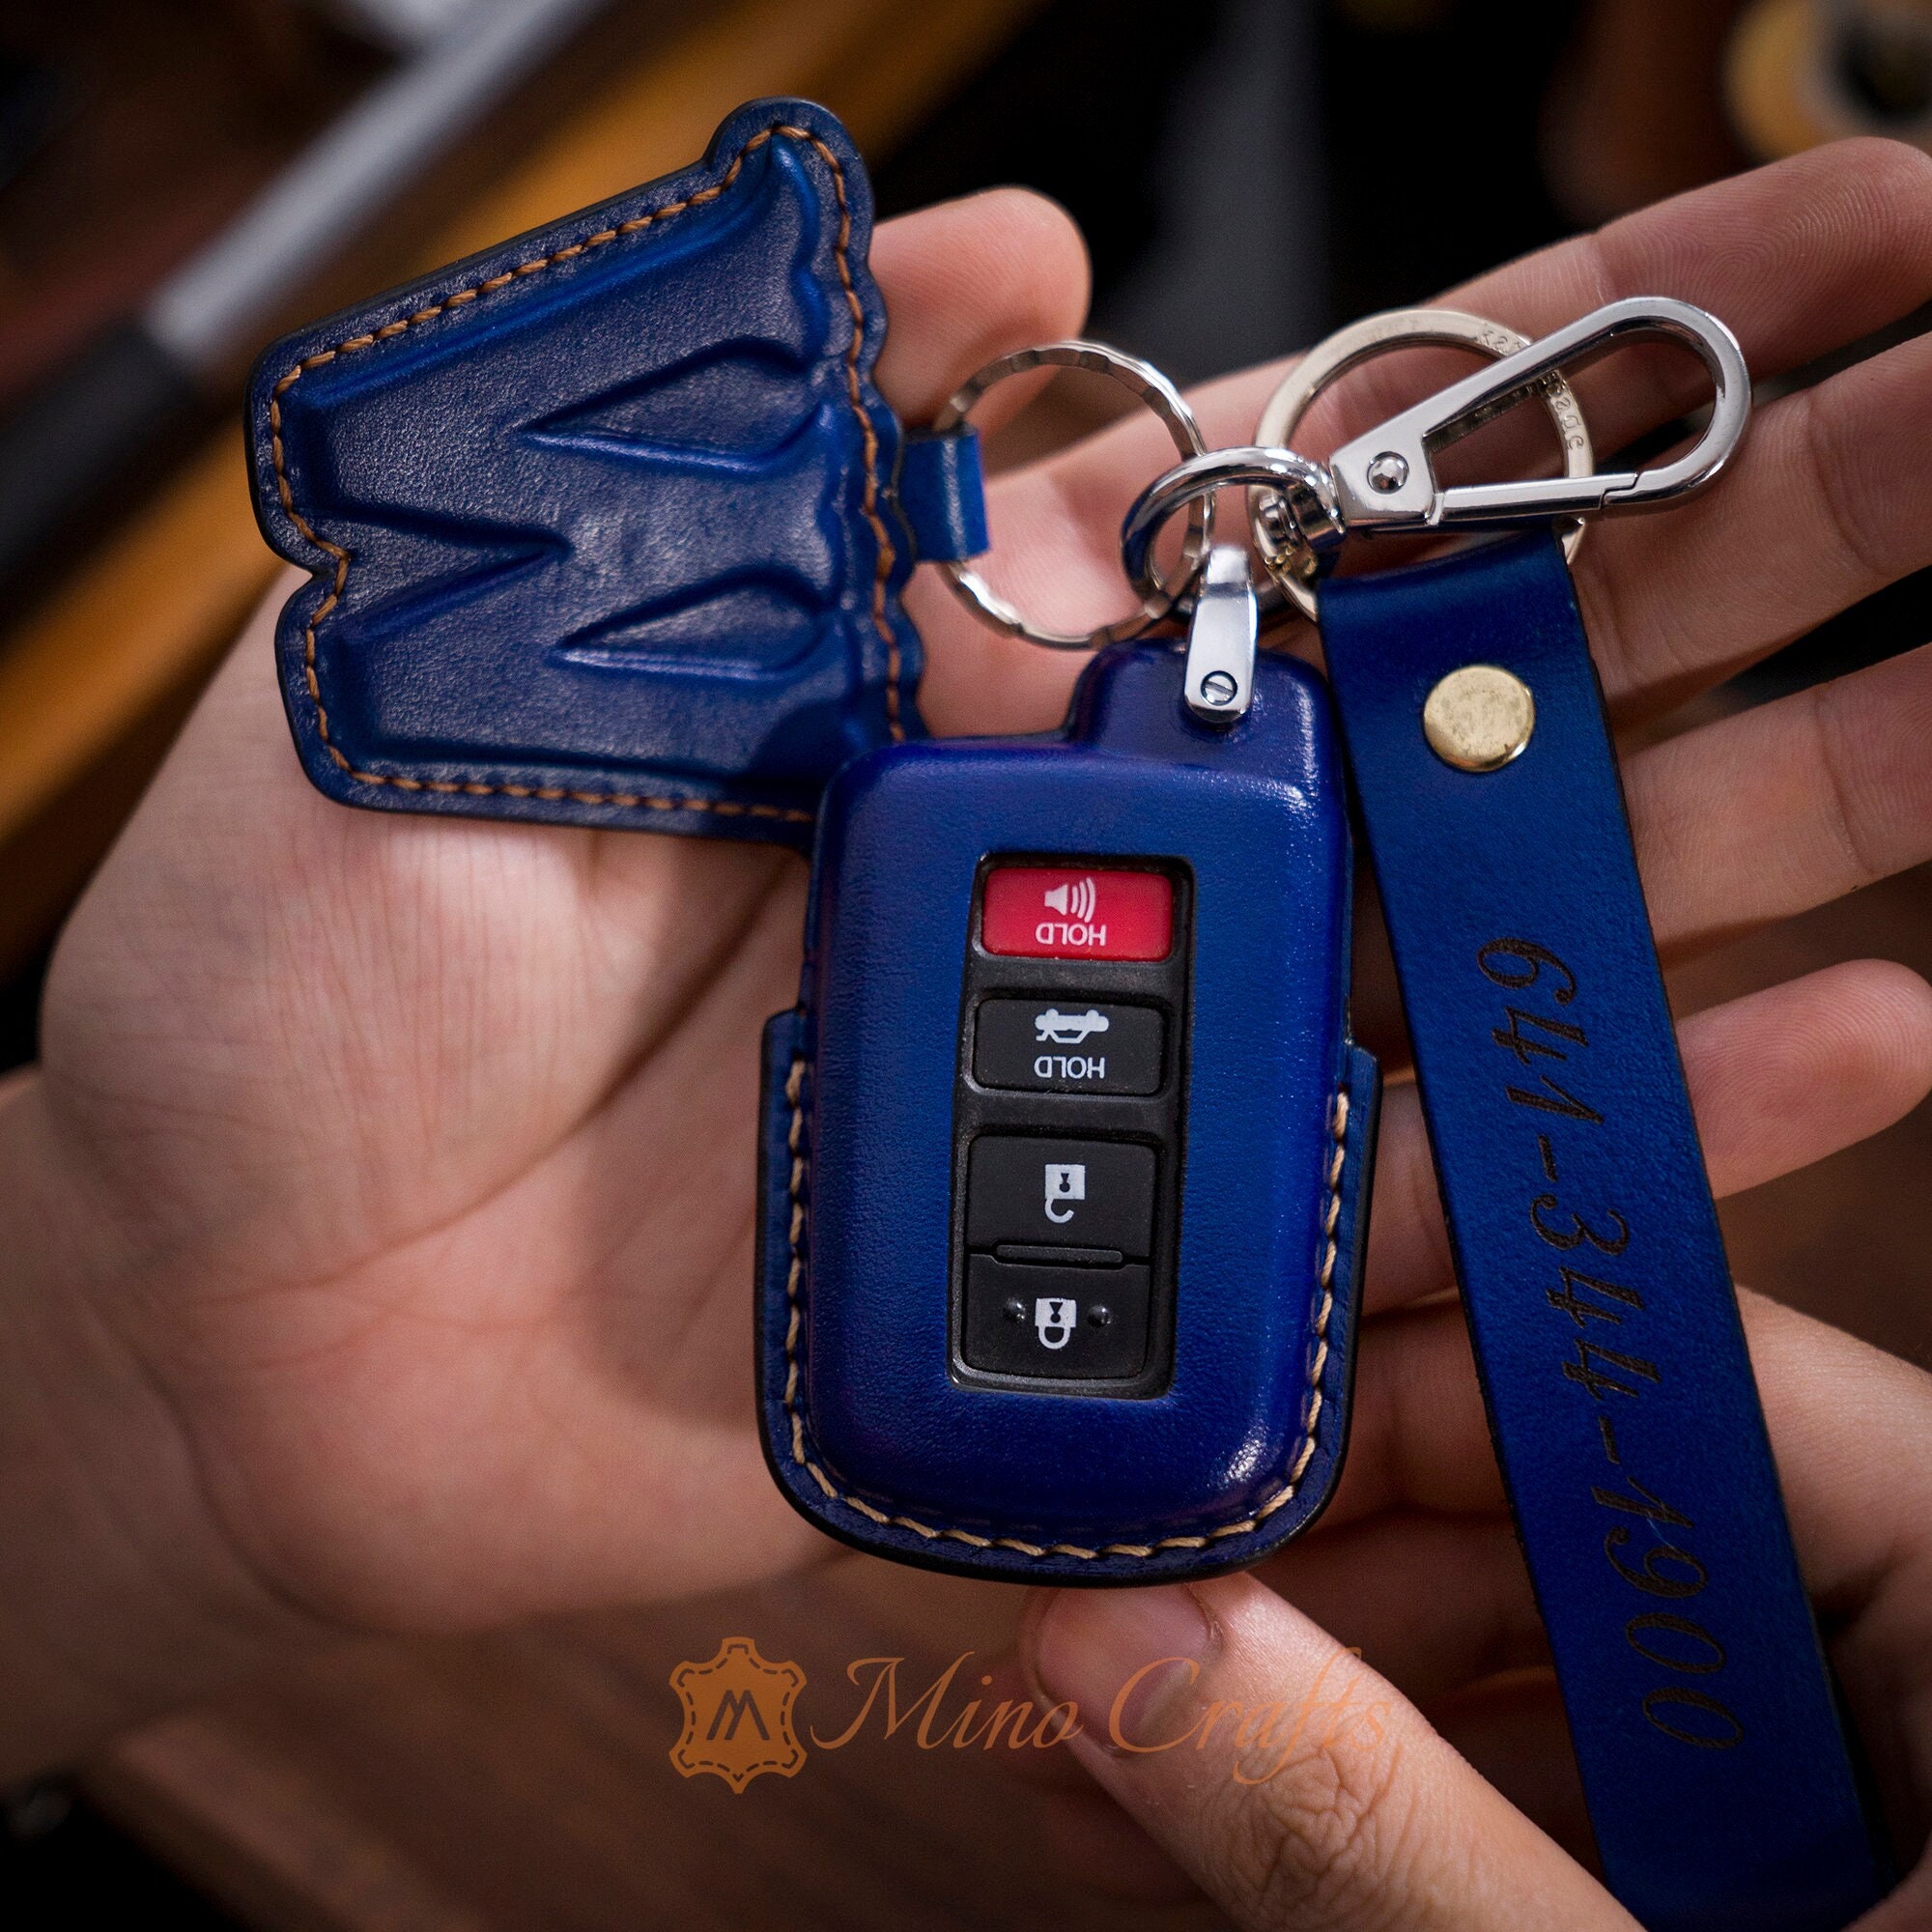 1pc Rhinestone Decor Car Key Case Compatible With Toyota, Key Fob Cover